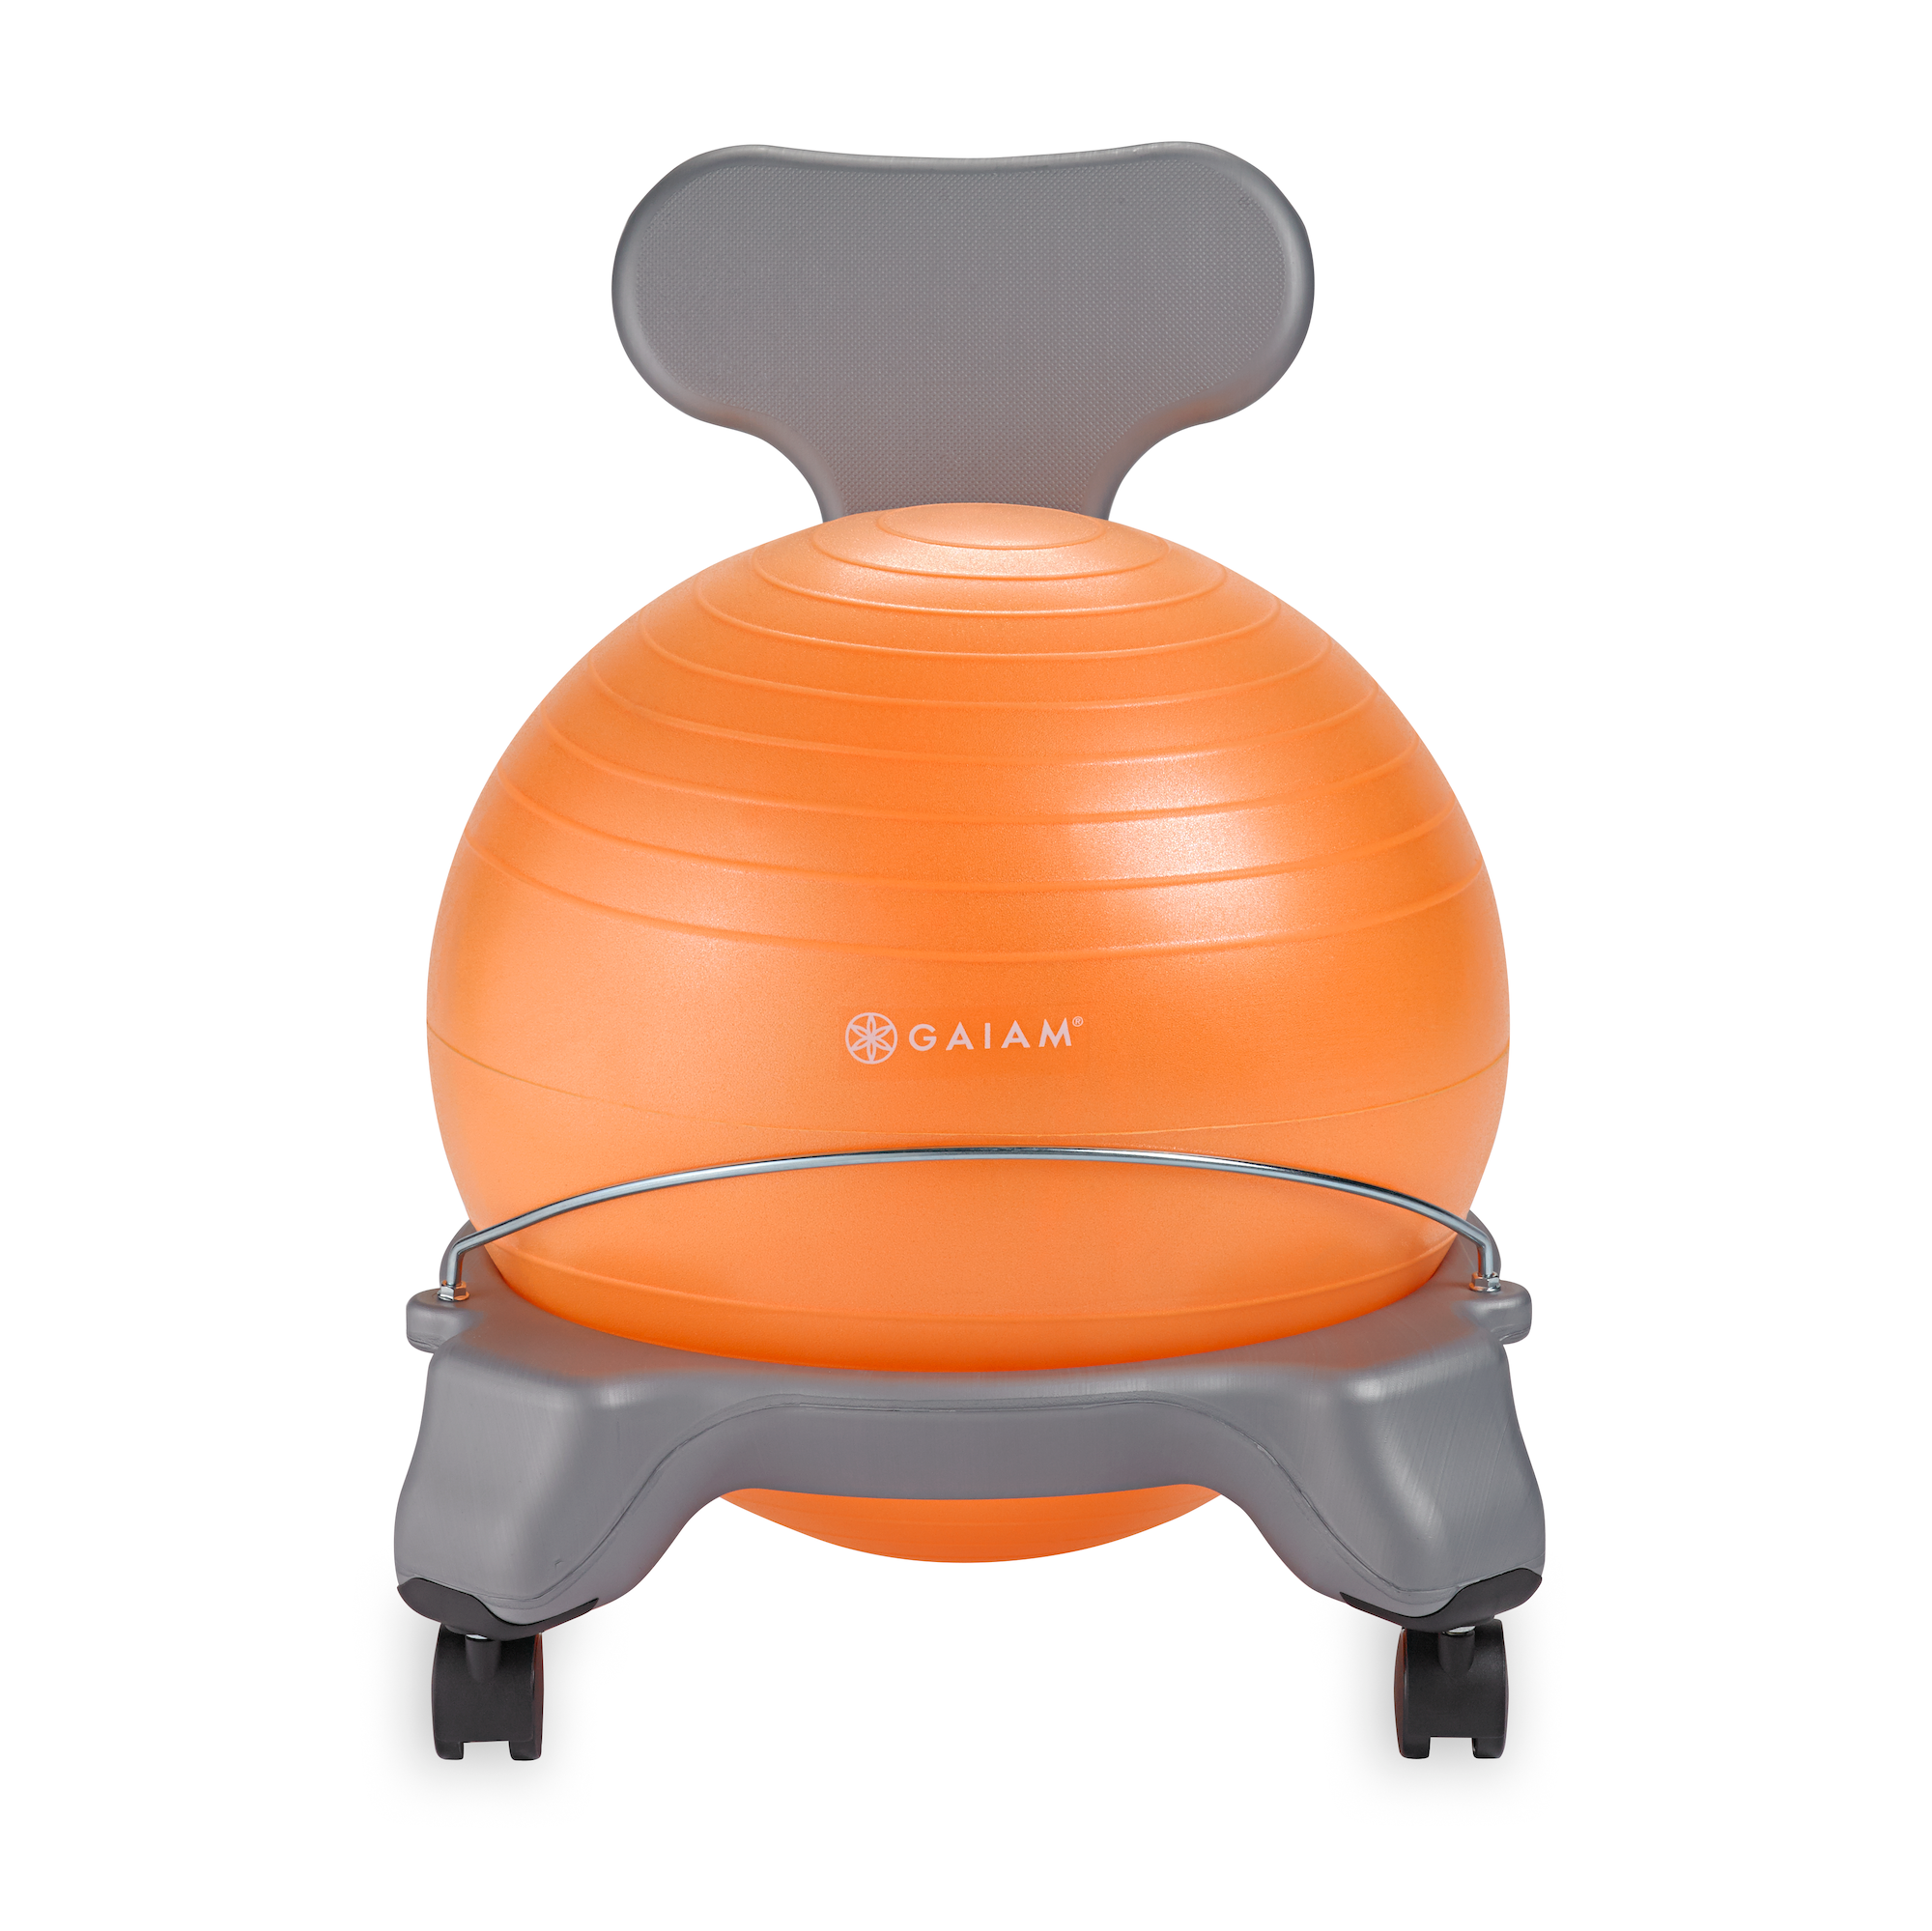 Gaiam Kids Classic Balance Ball® Chair Orange/Grey front